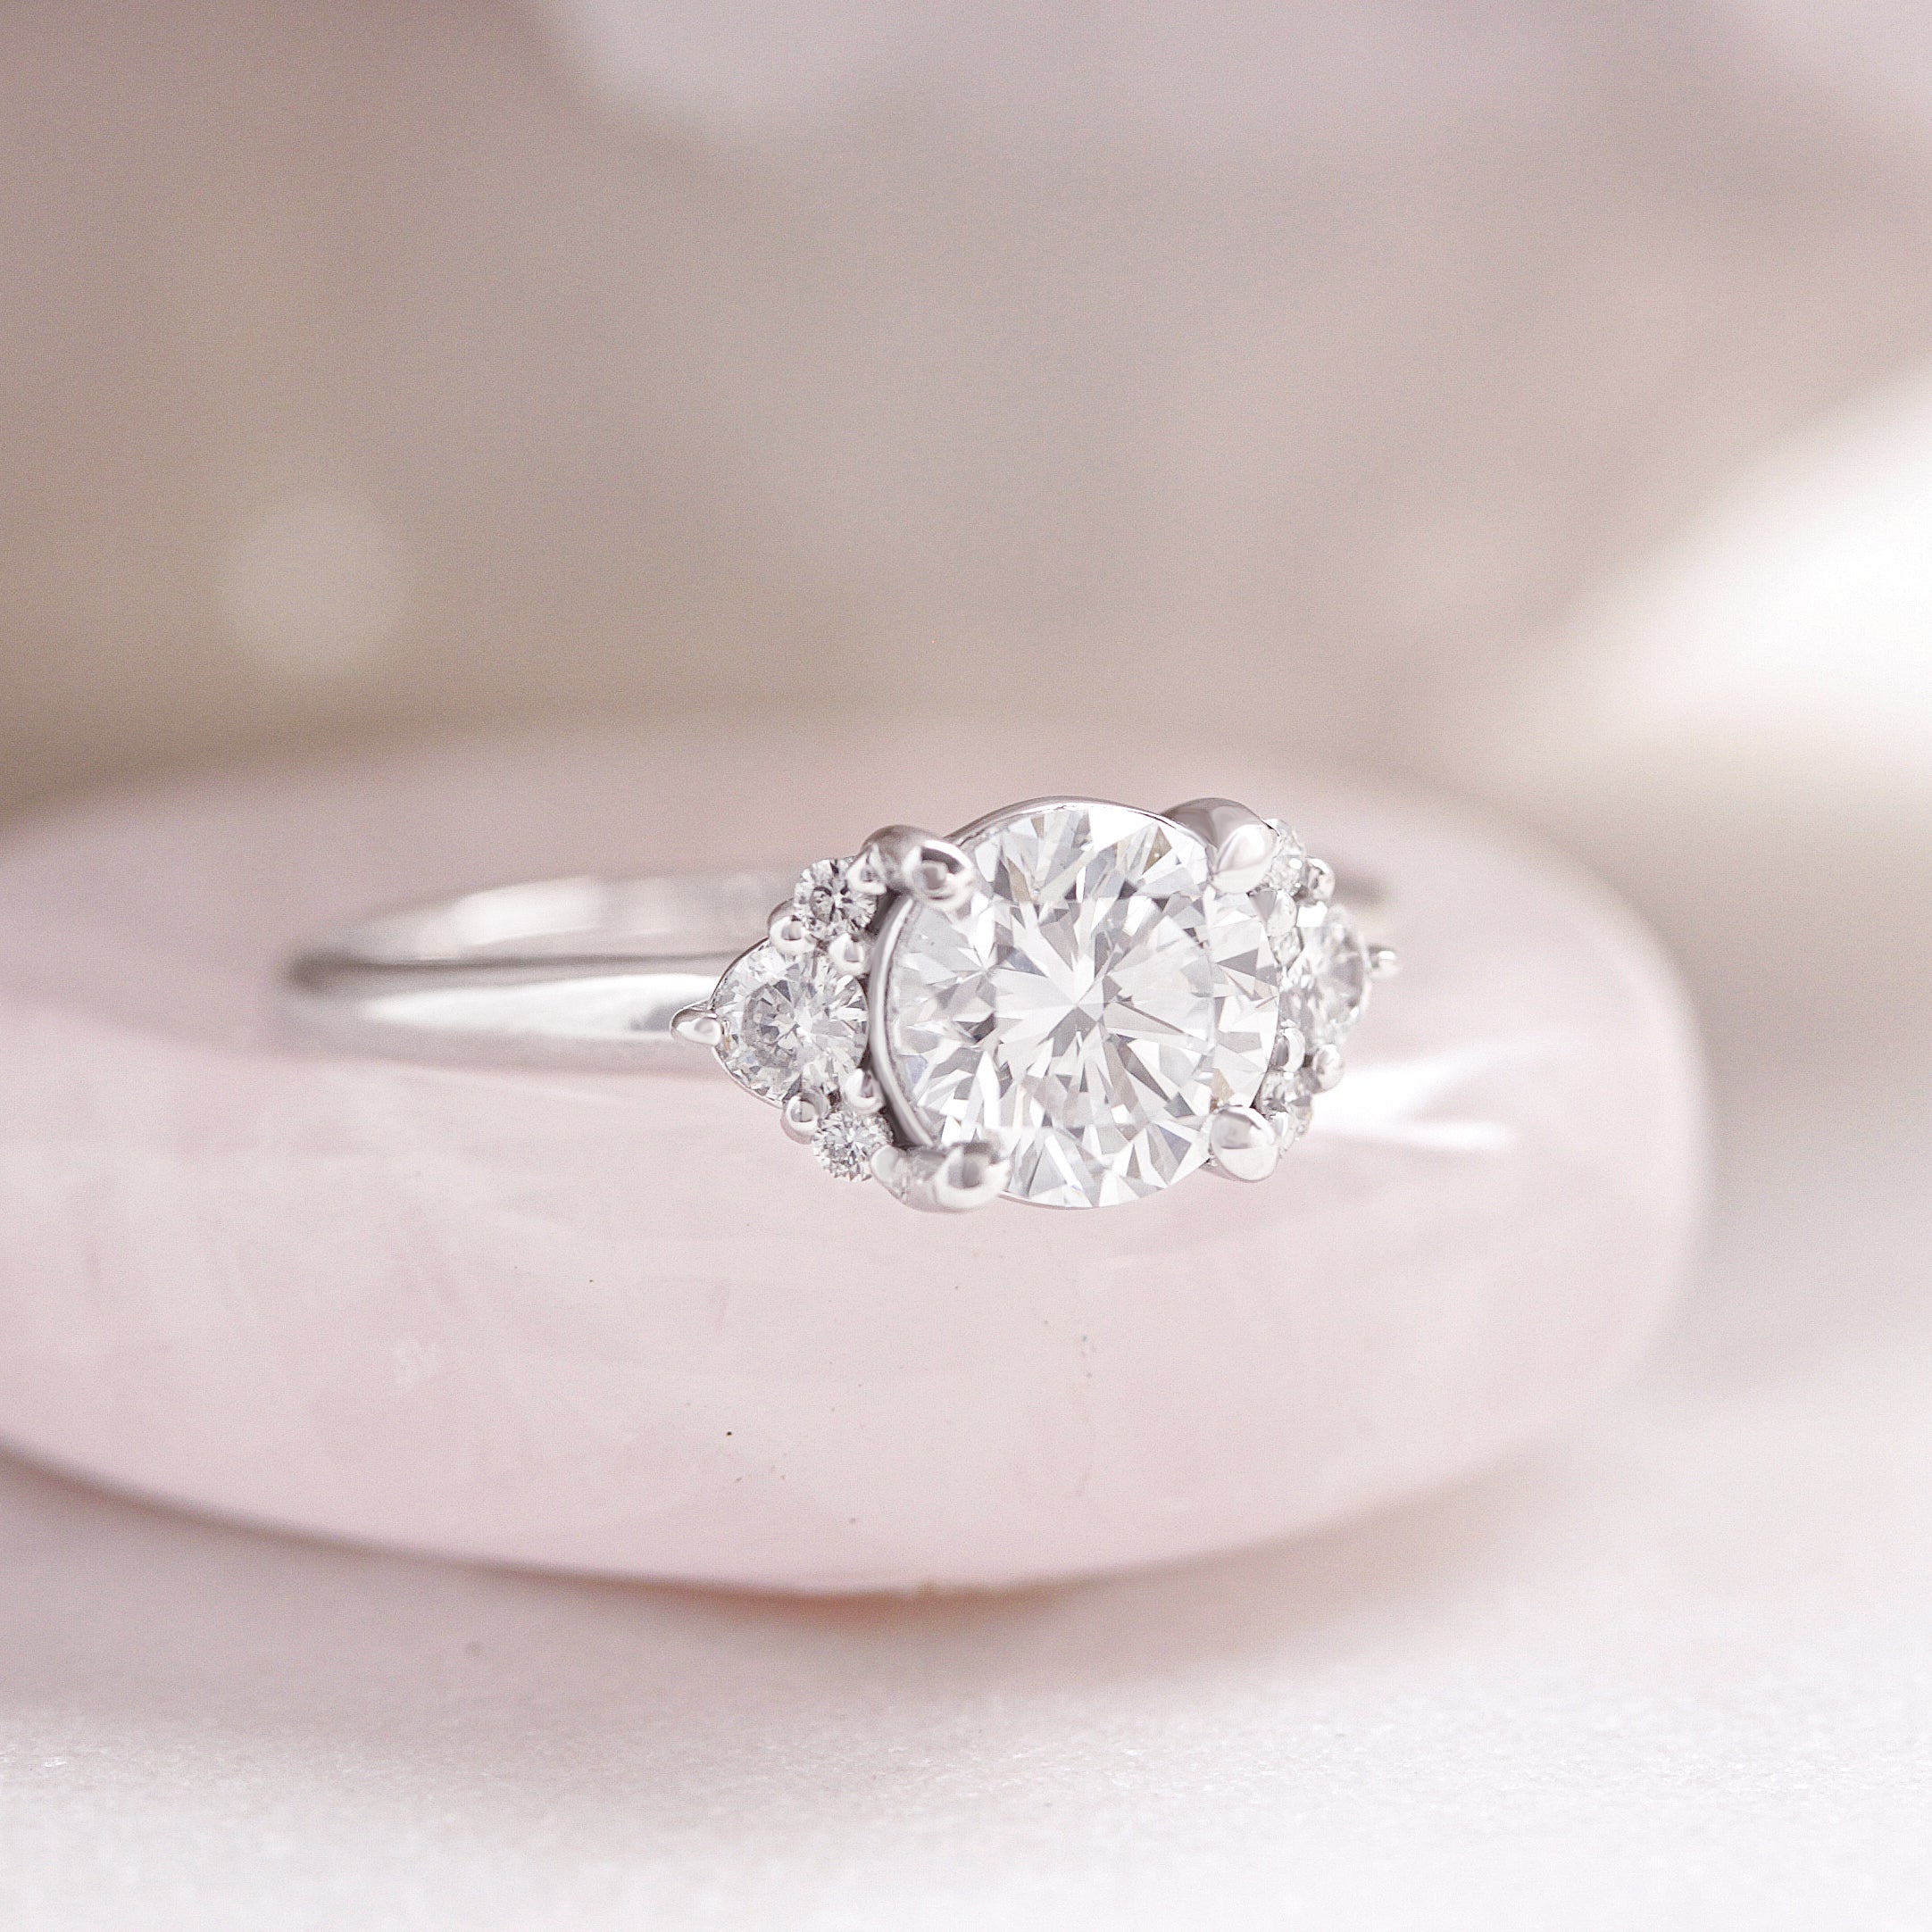 Round Lab Diamond Engagement Ring, White Gold, "Isabella", READY TO SHIP! ♥